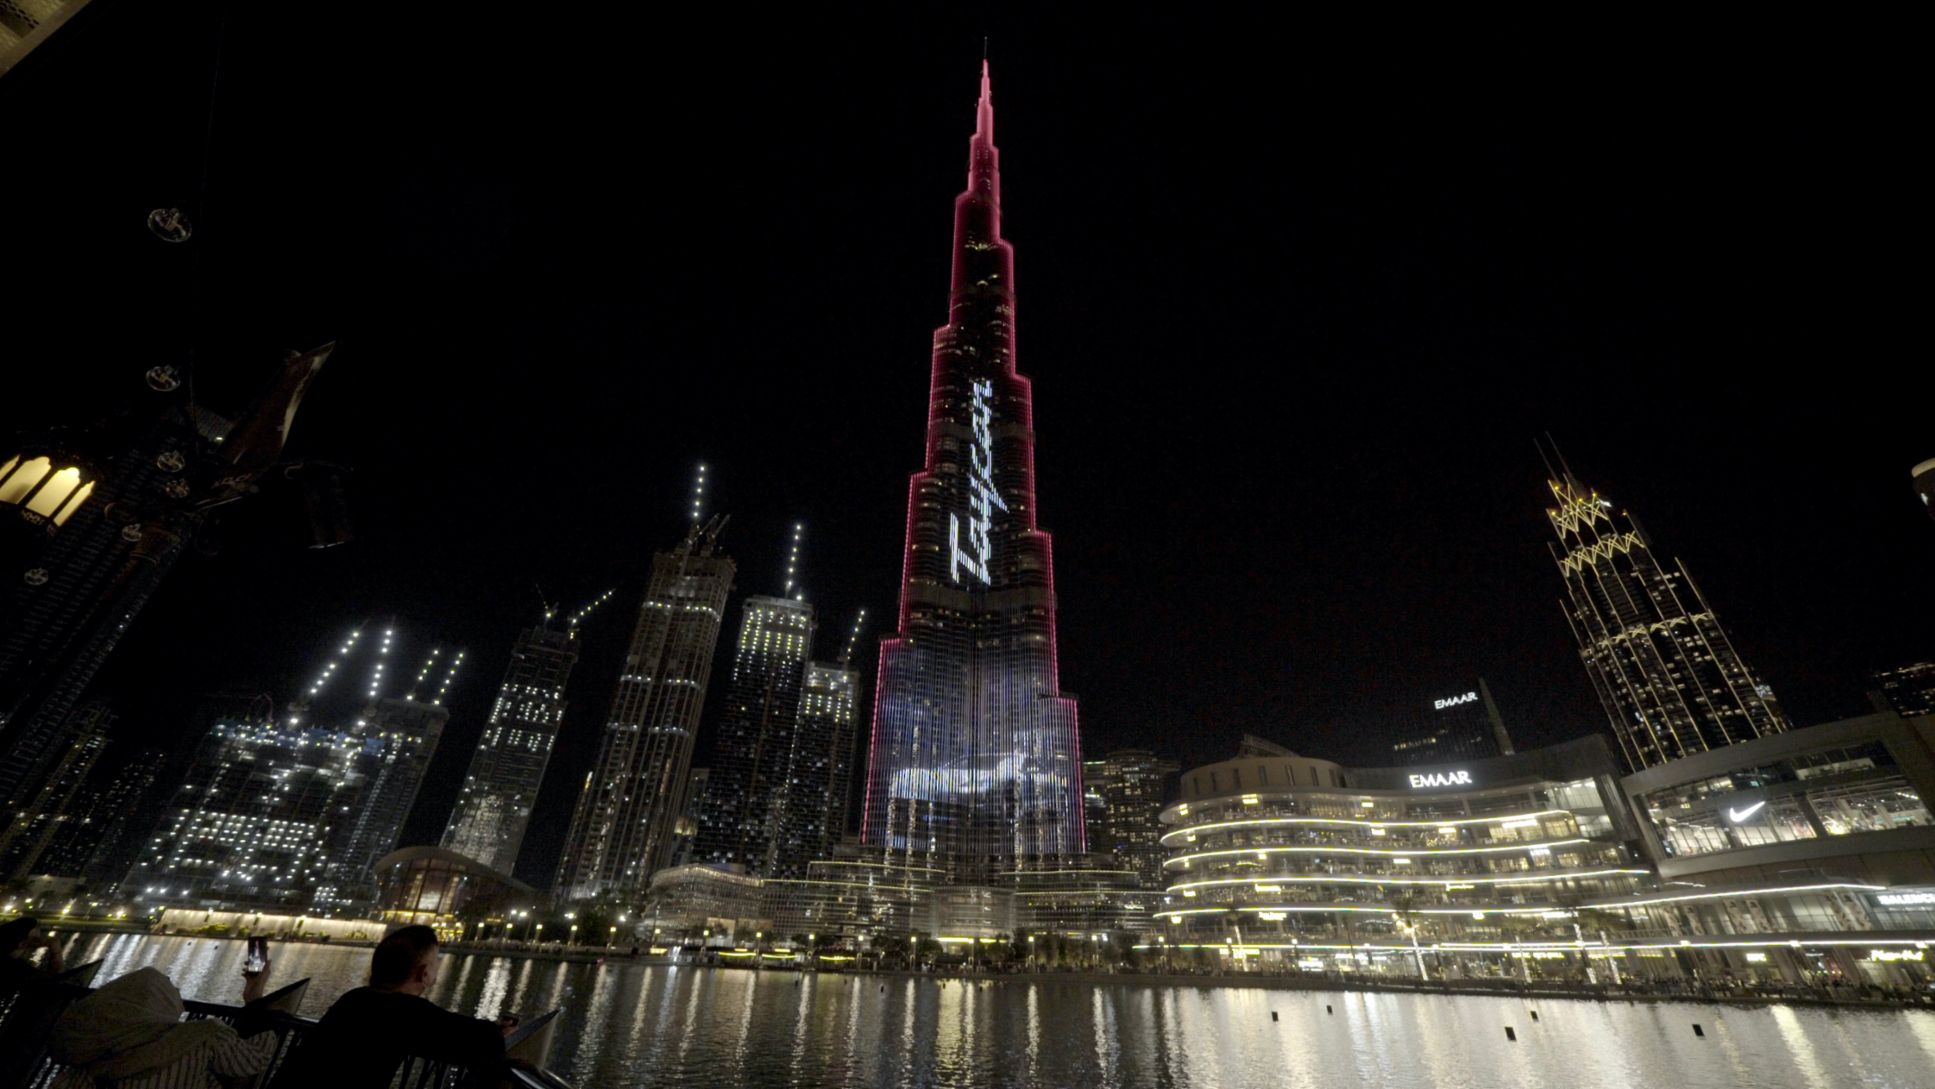 Show de luces en el edificio Burj Khalifa, de Dubái.